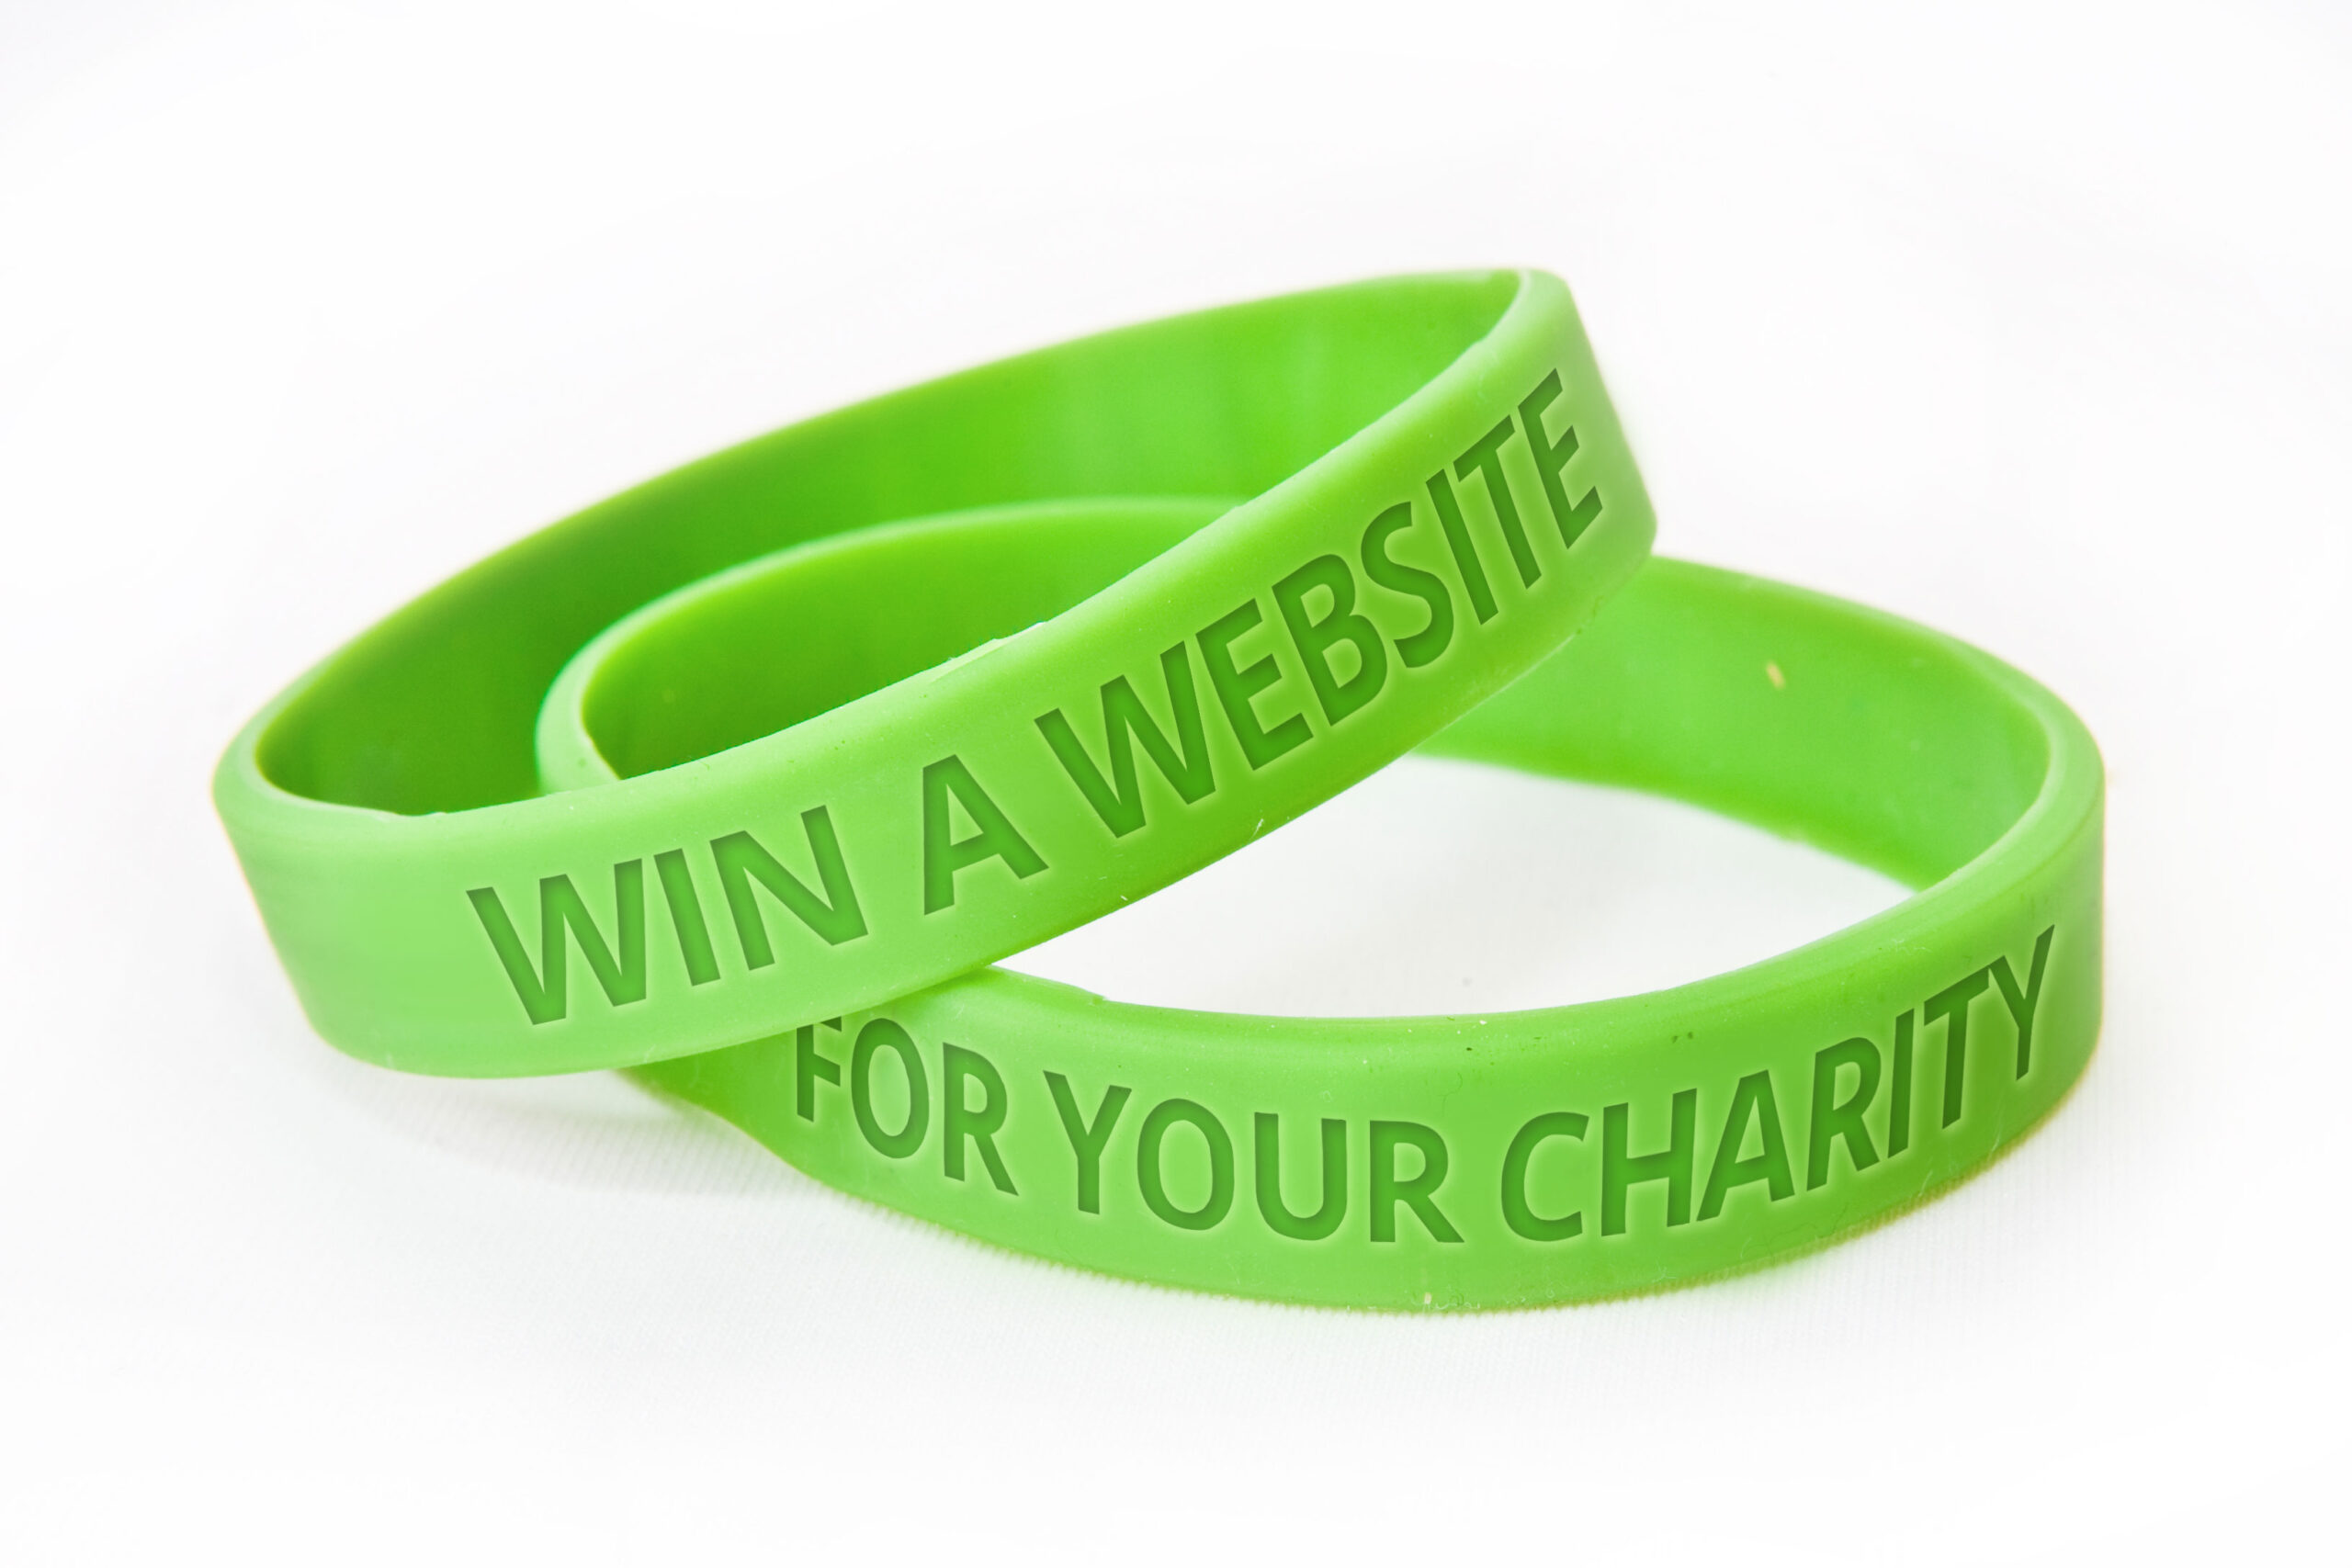 adigi charity website competition